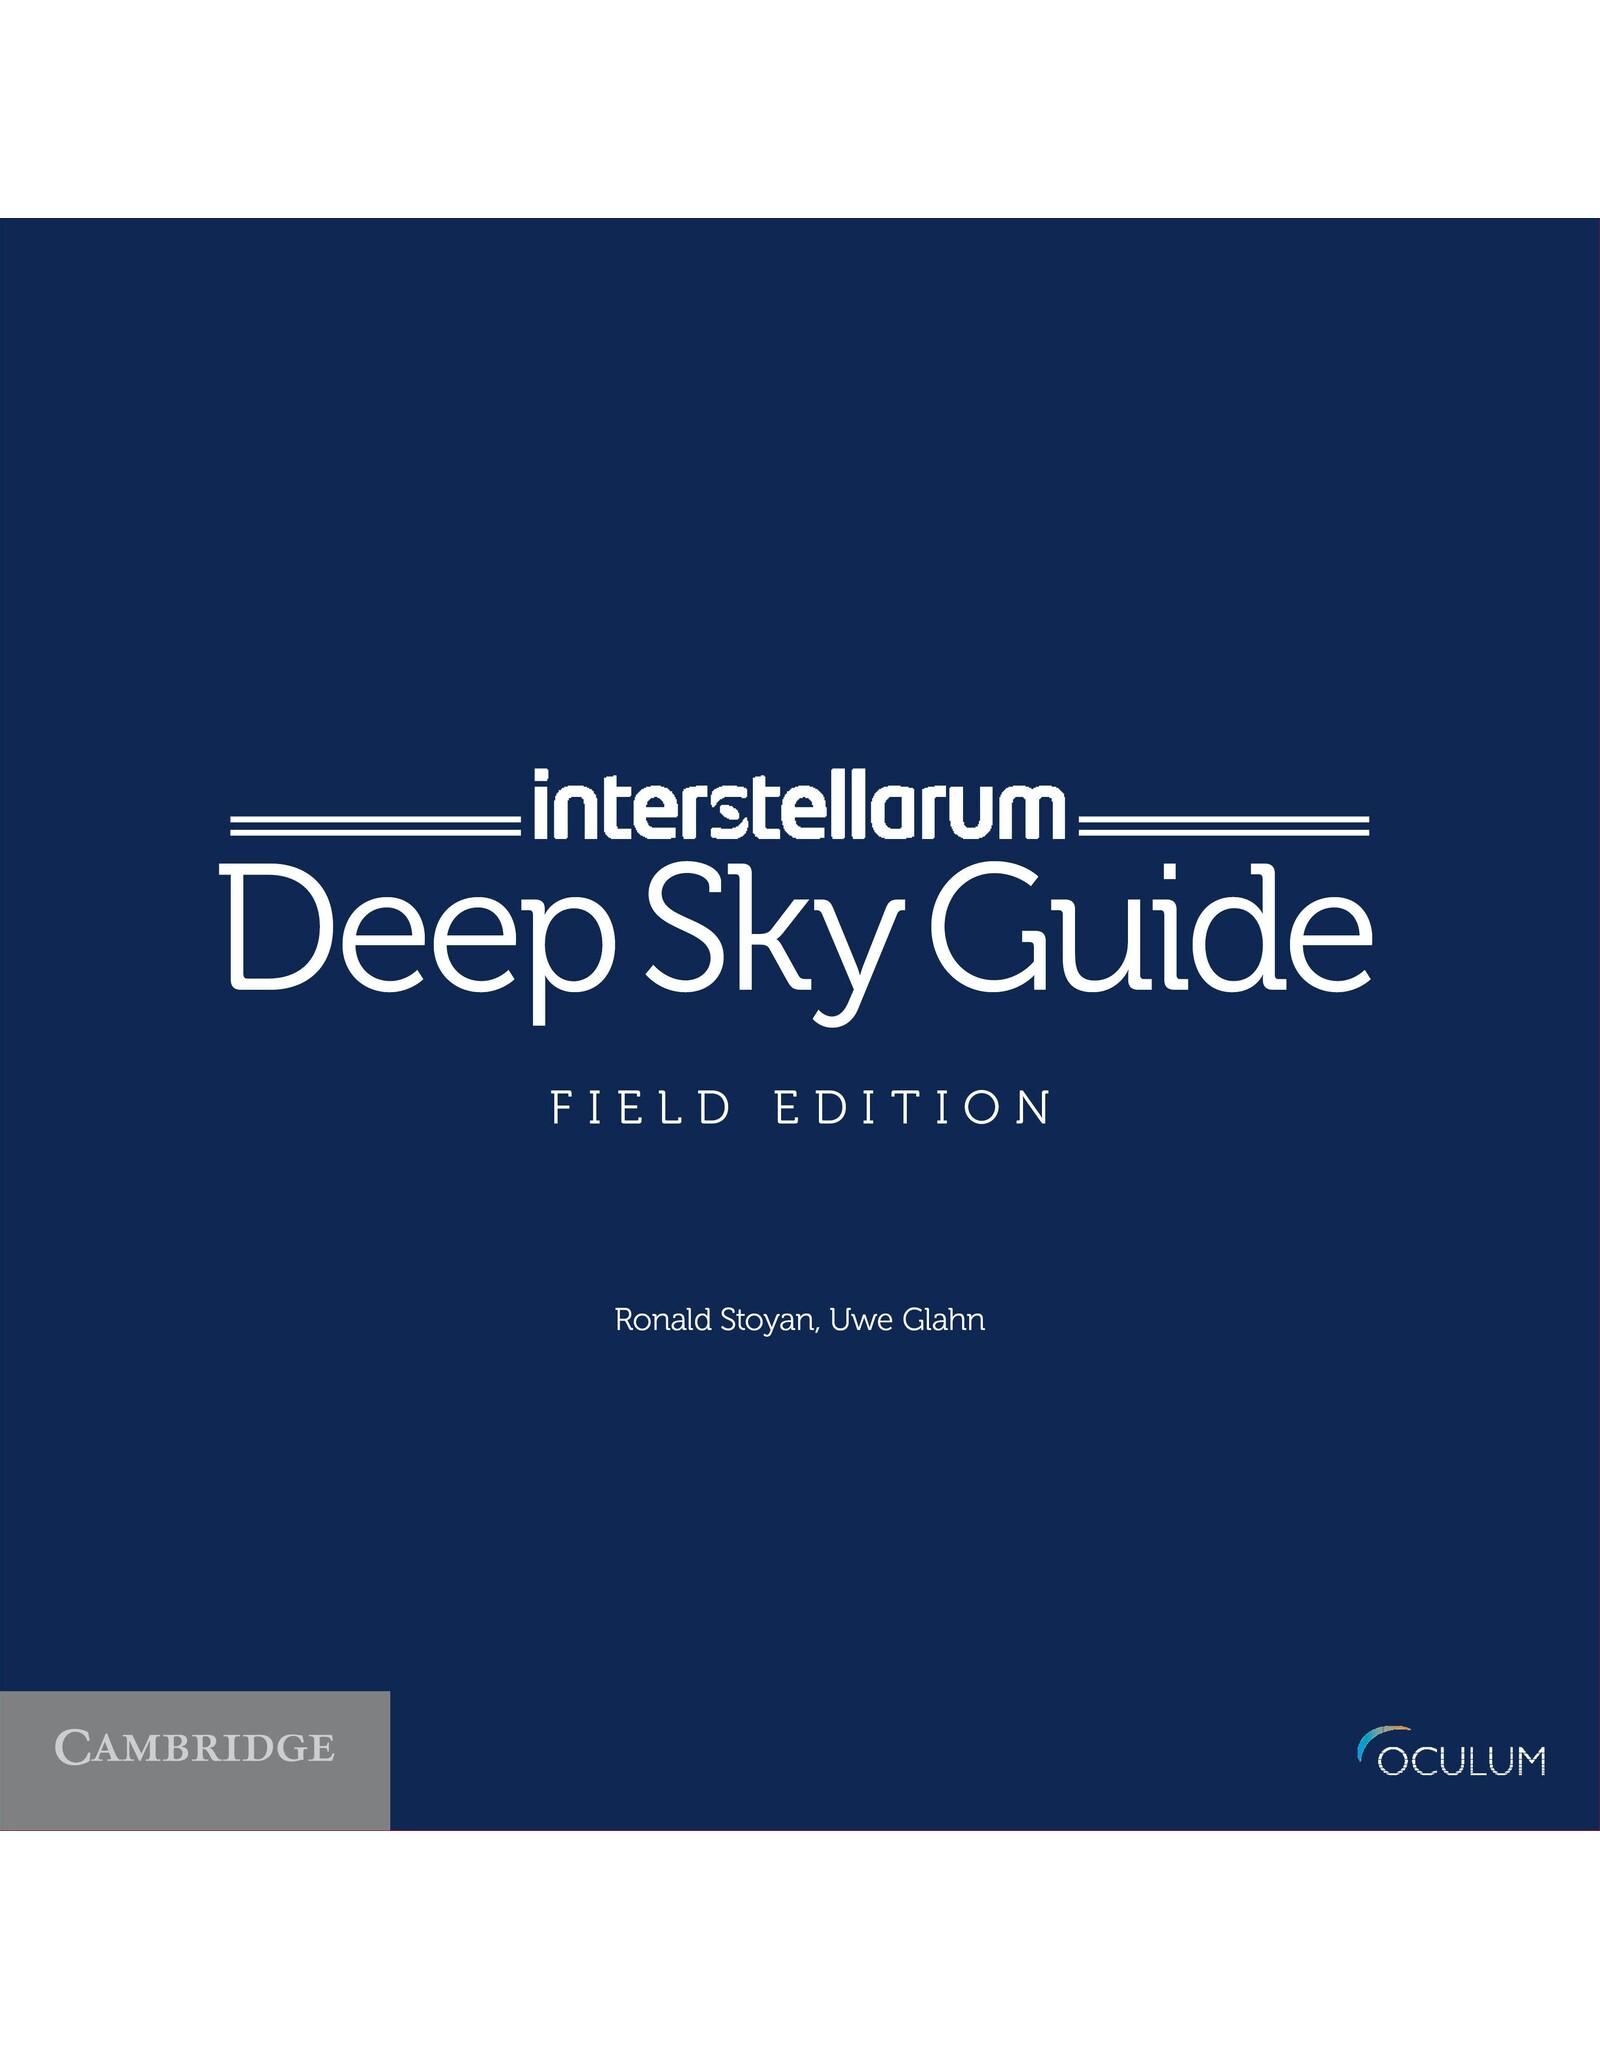 Cambridge Interstellarum Deep Sky Guide Field Edition